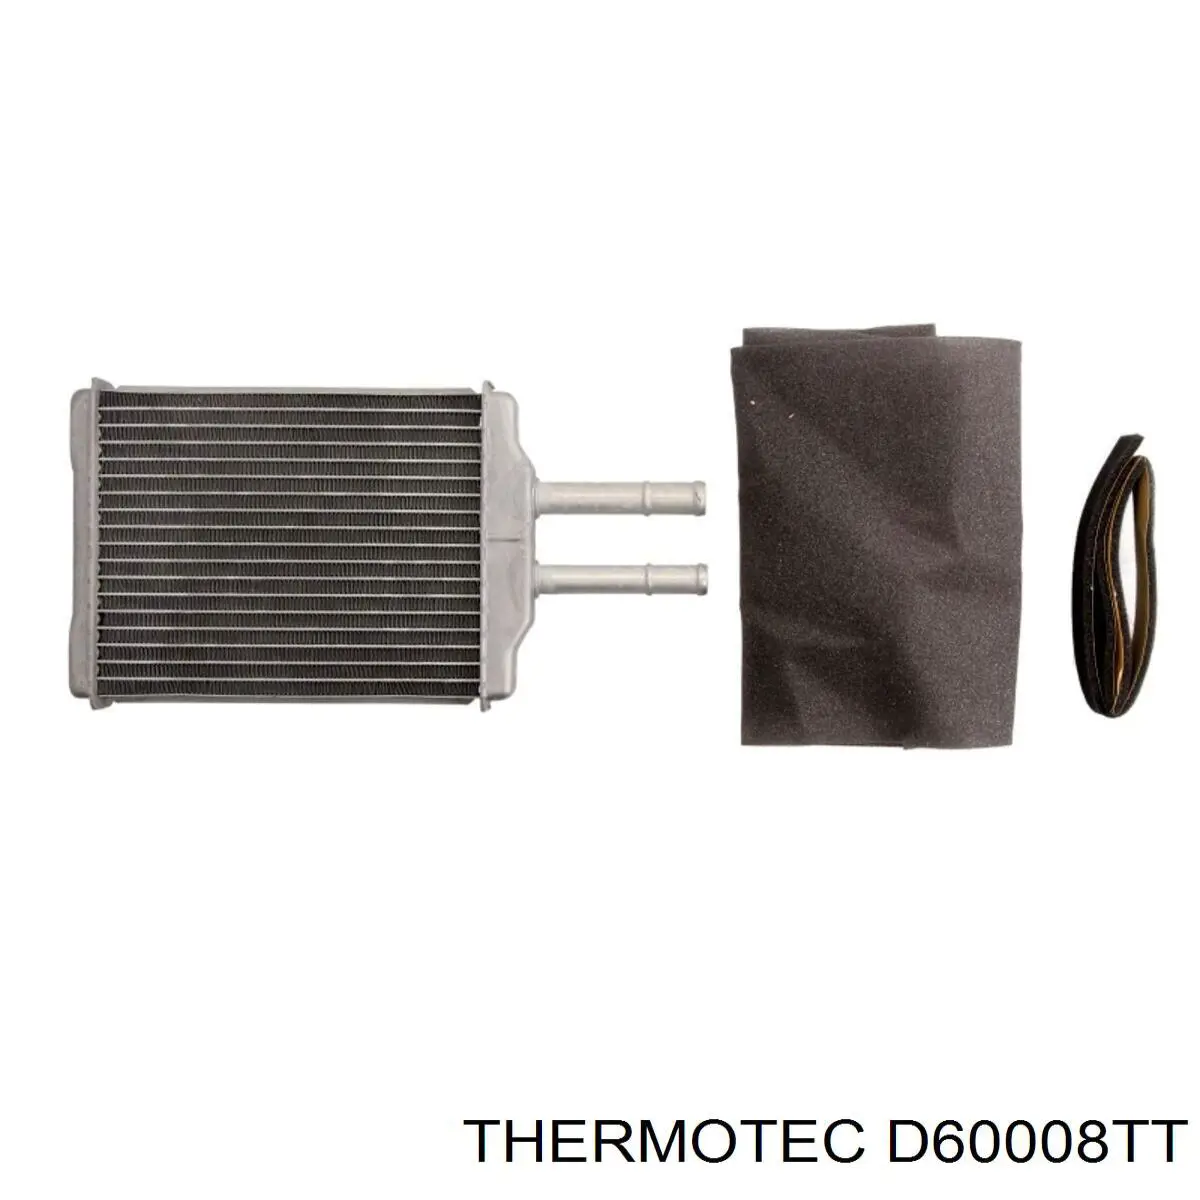 D60008TT Thermotec radiador de calefacción